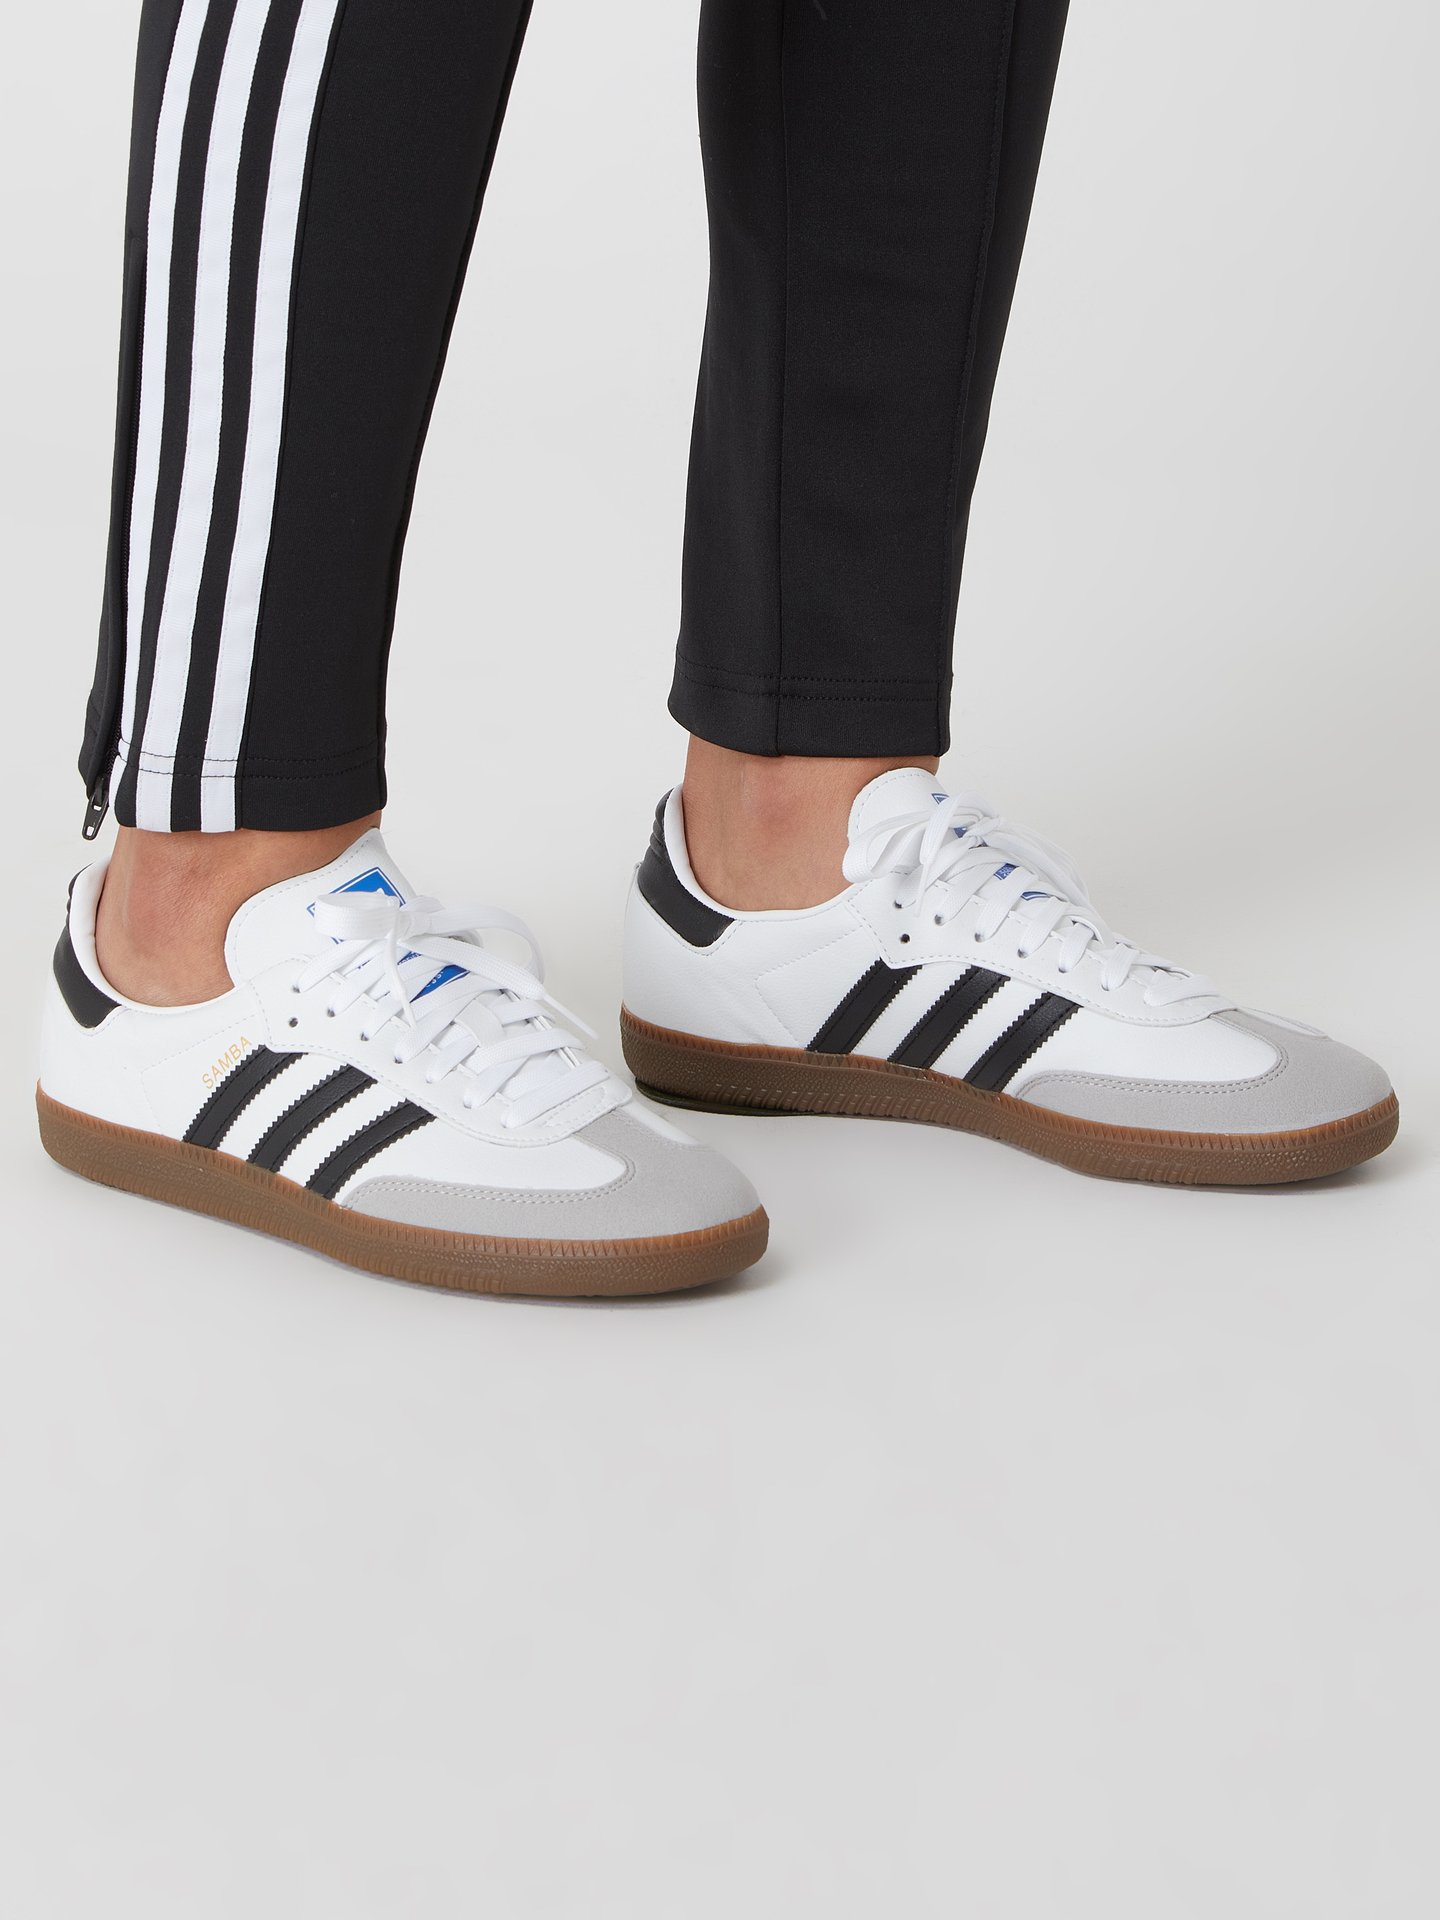 Molestia Sofocar escribir adidas Originals Sneaker in Leder-Optik Modell 'Samba' (weiß) online kaufen